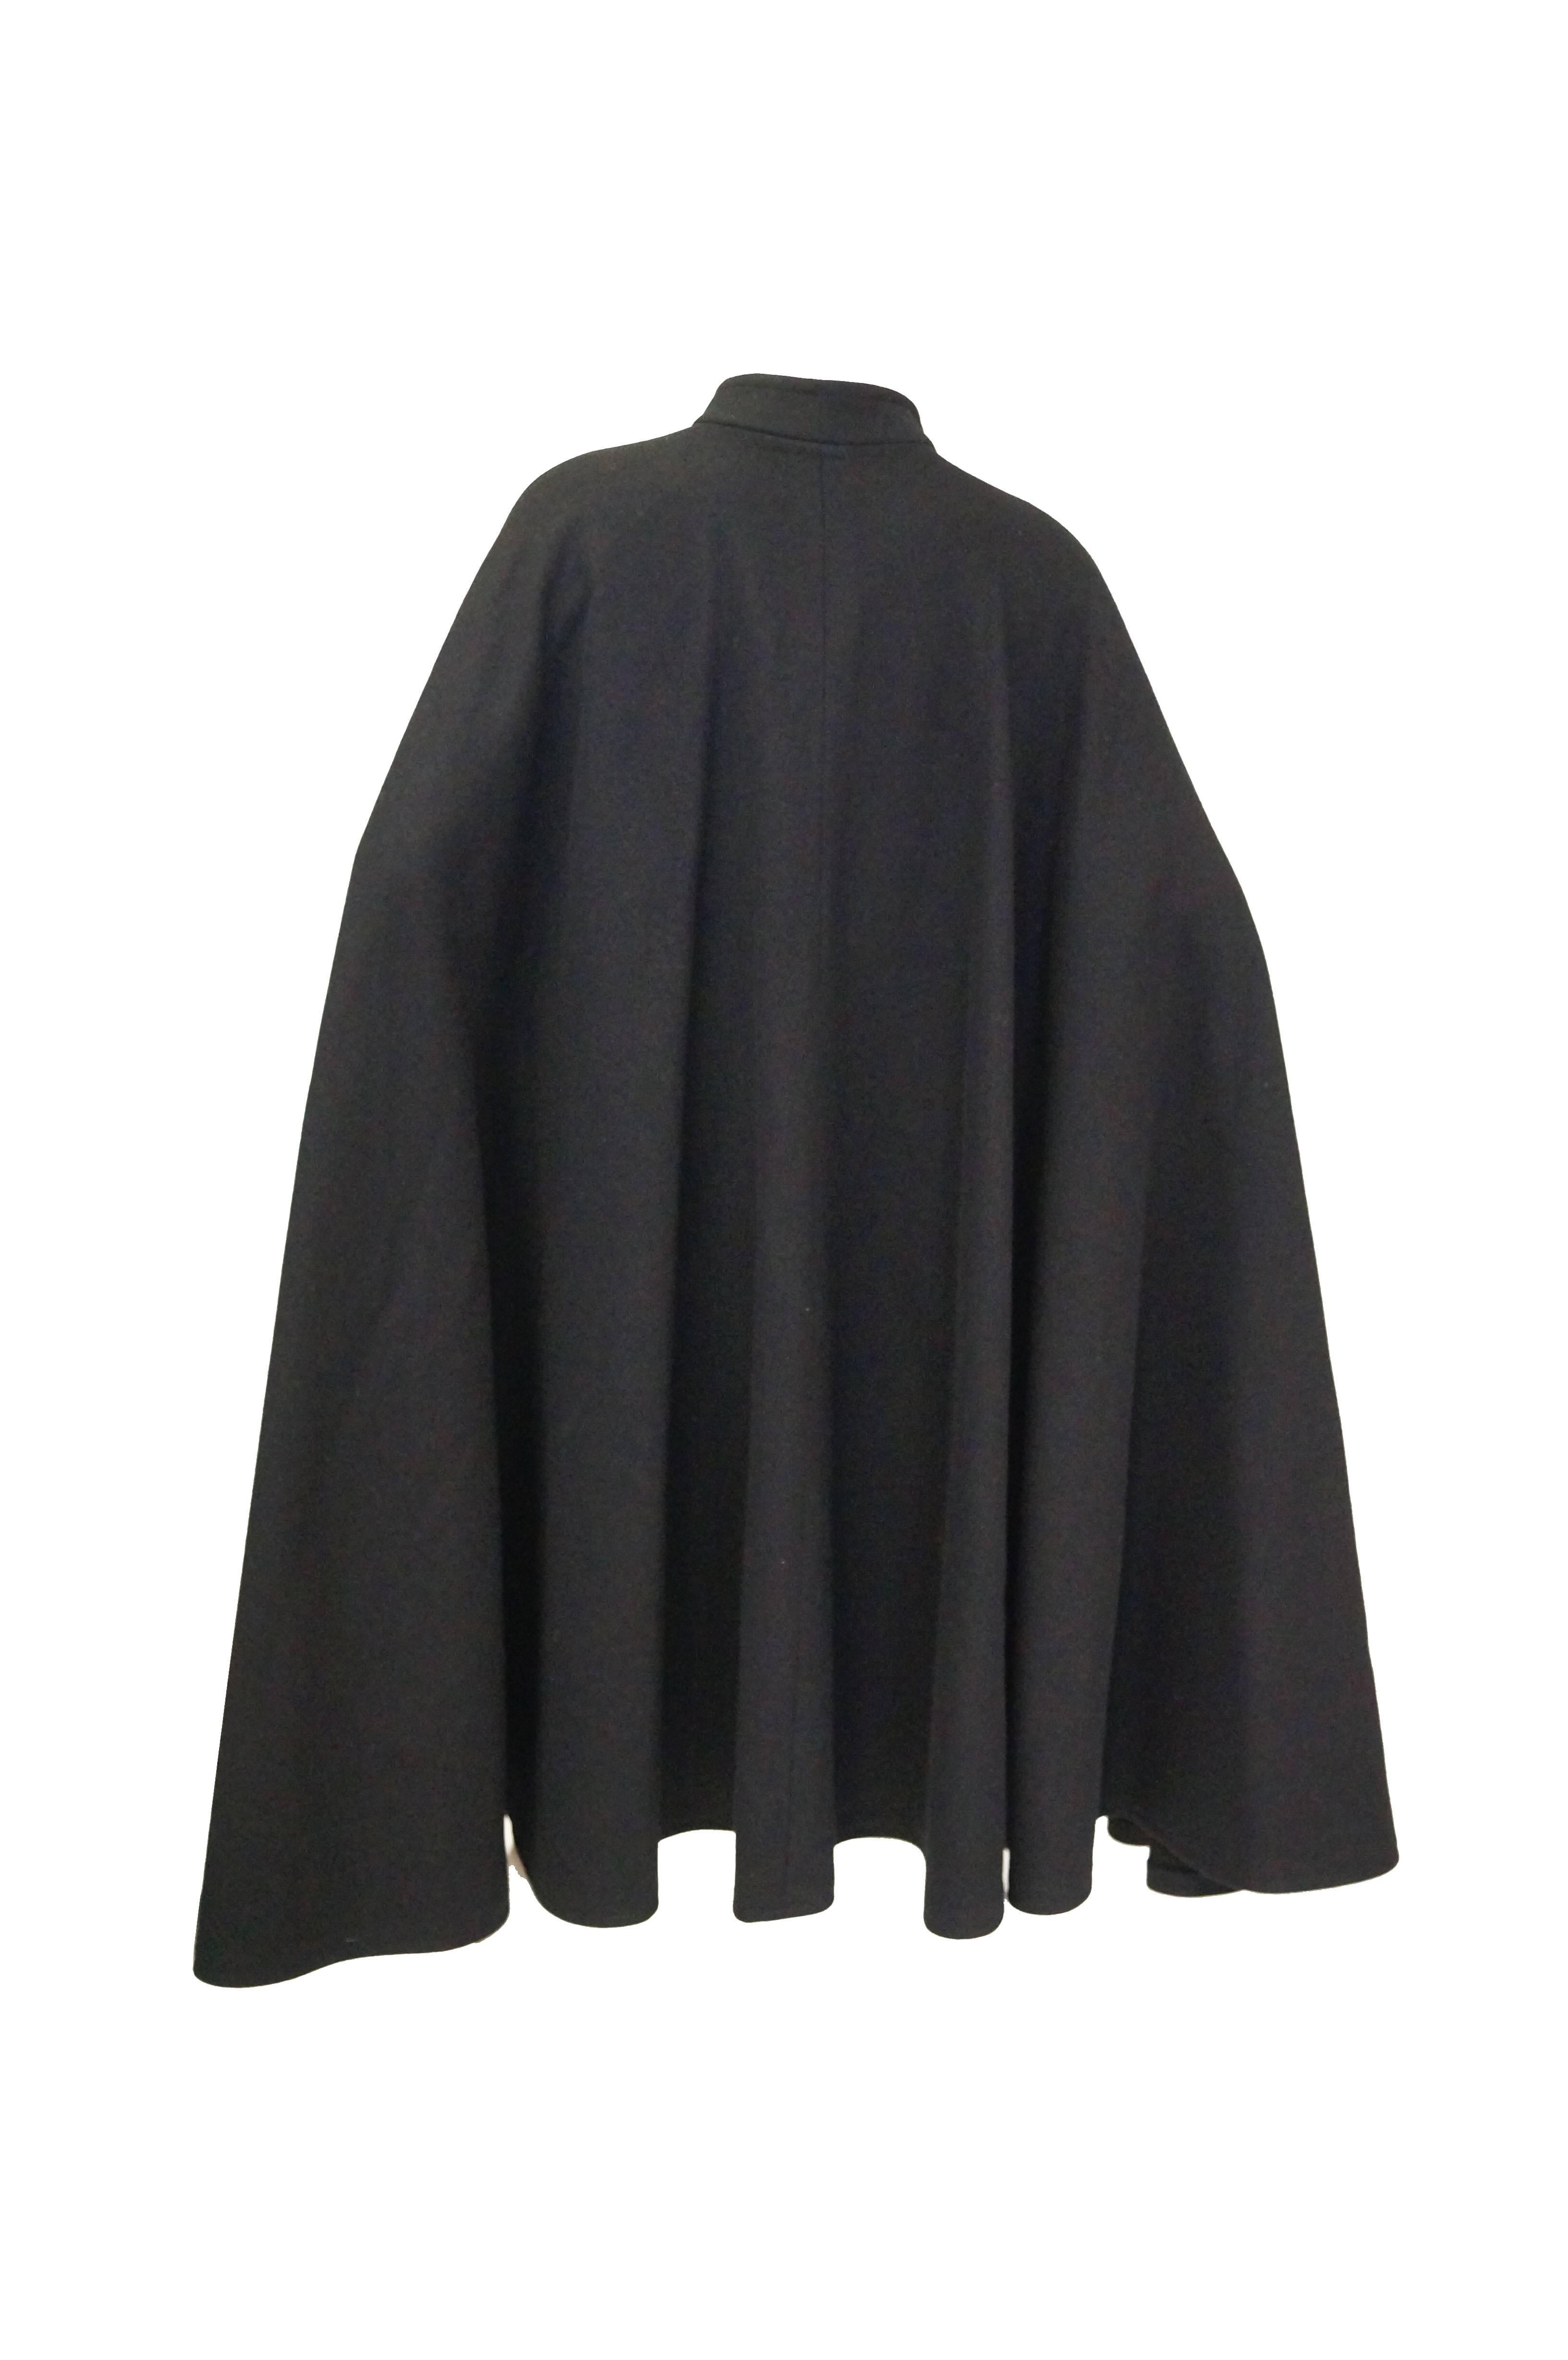 black cloak with collar